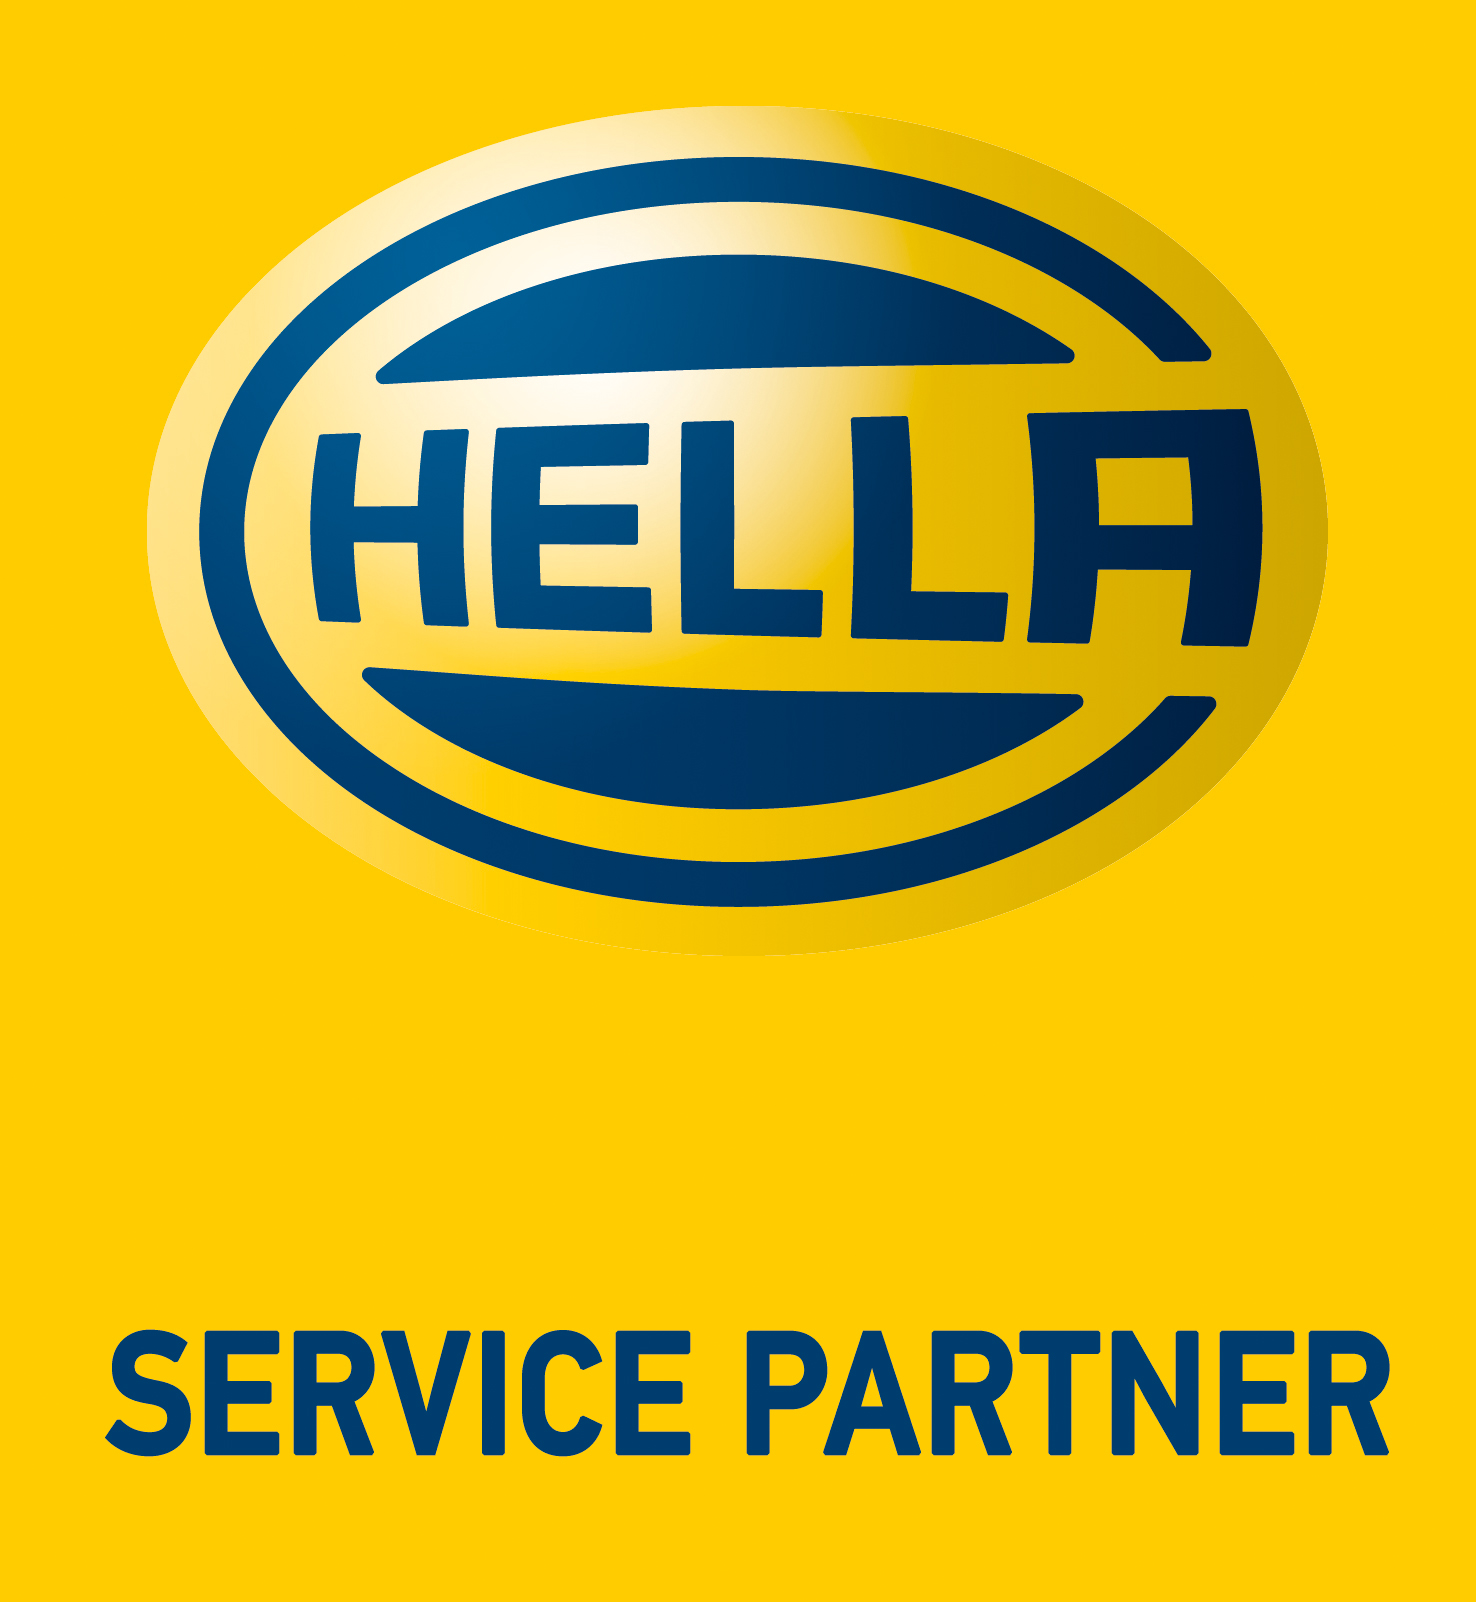 Stounbjerg Auto - Hella Service Partner logo